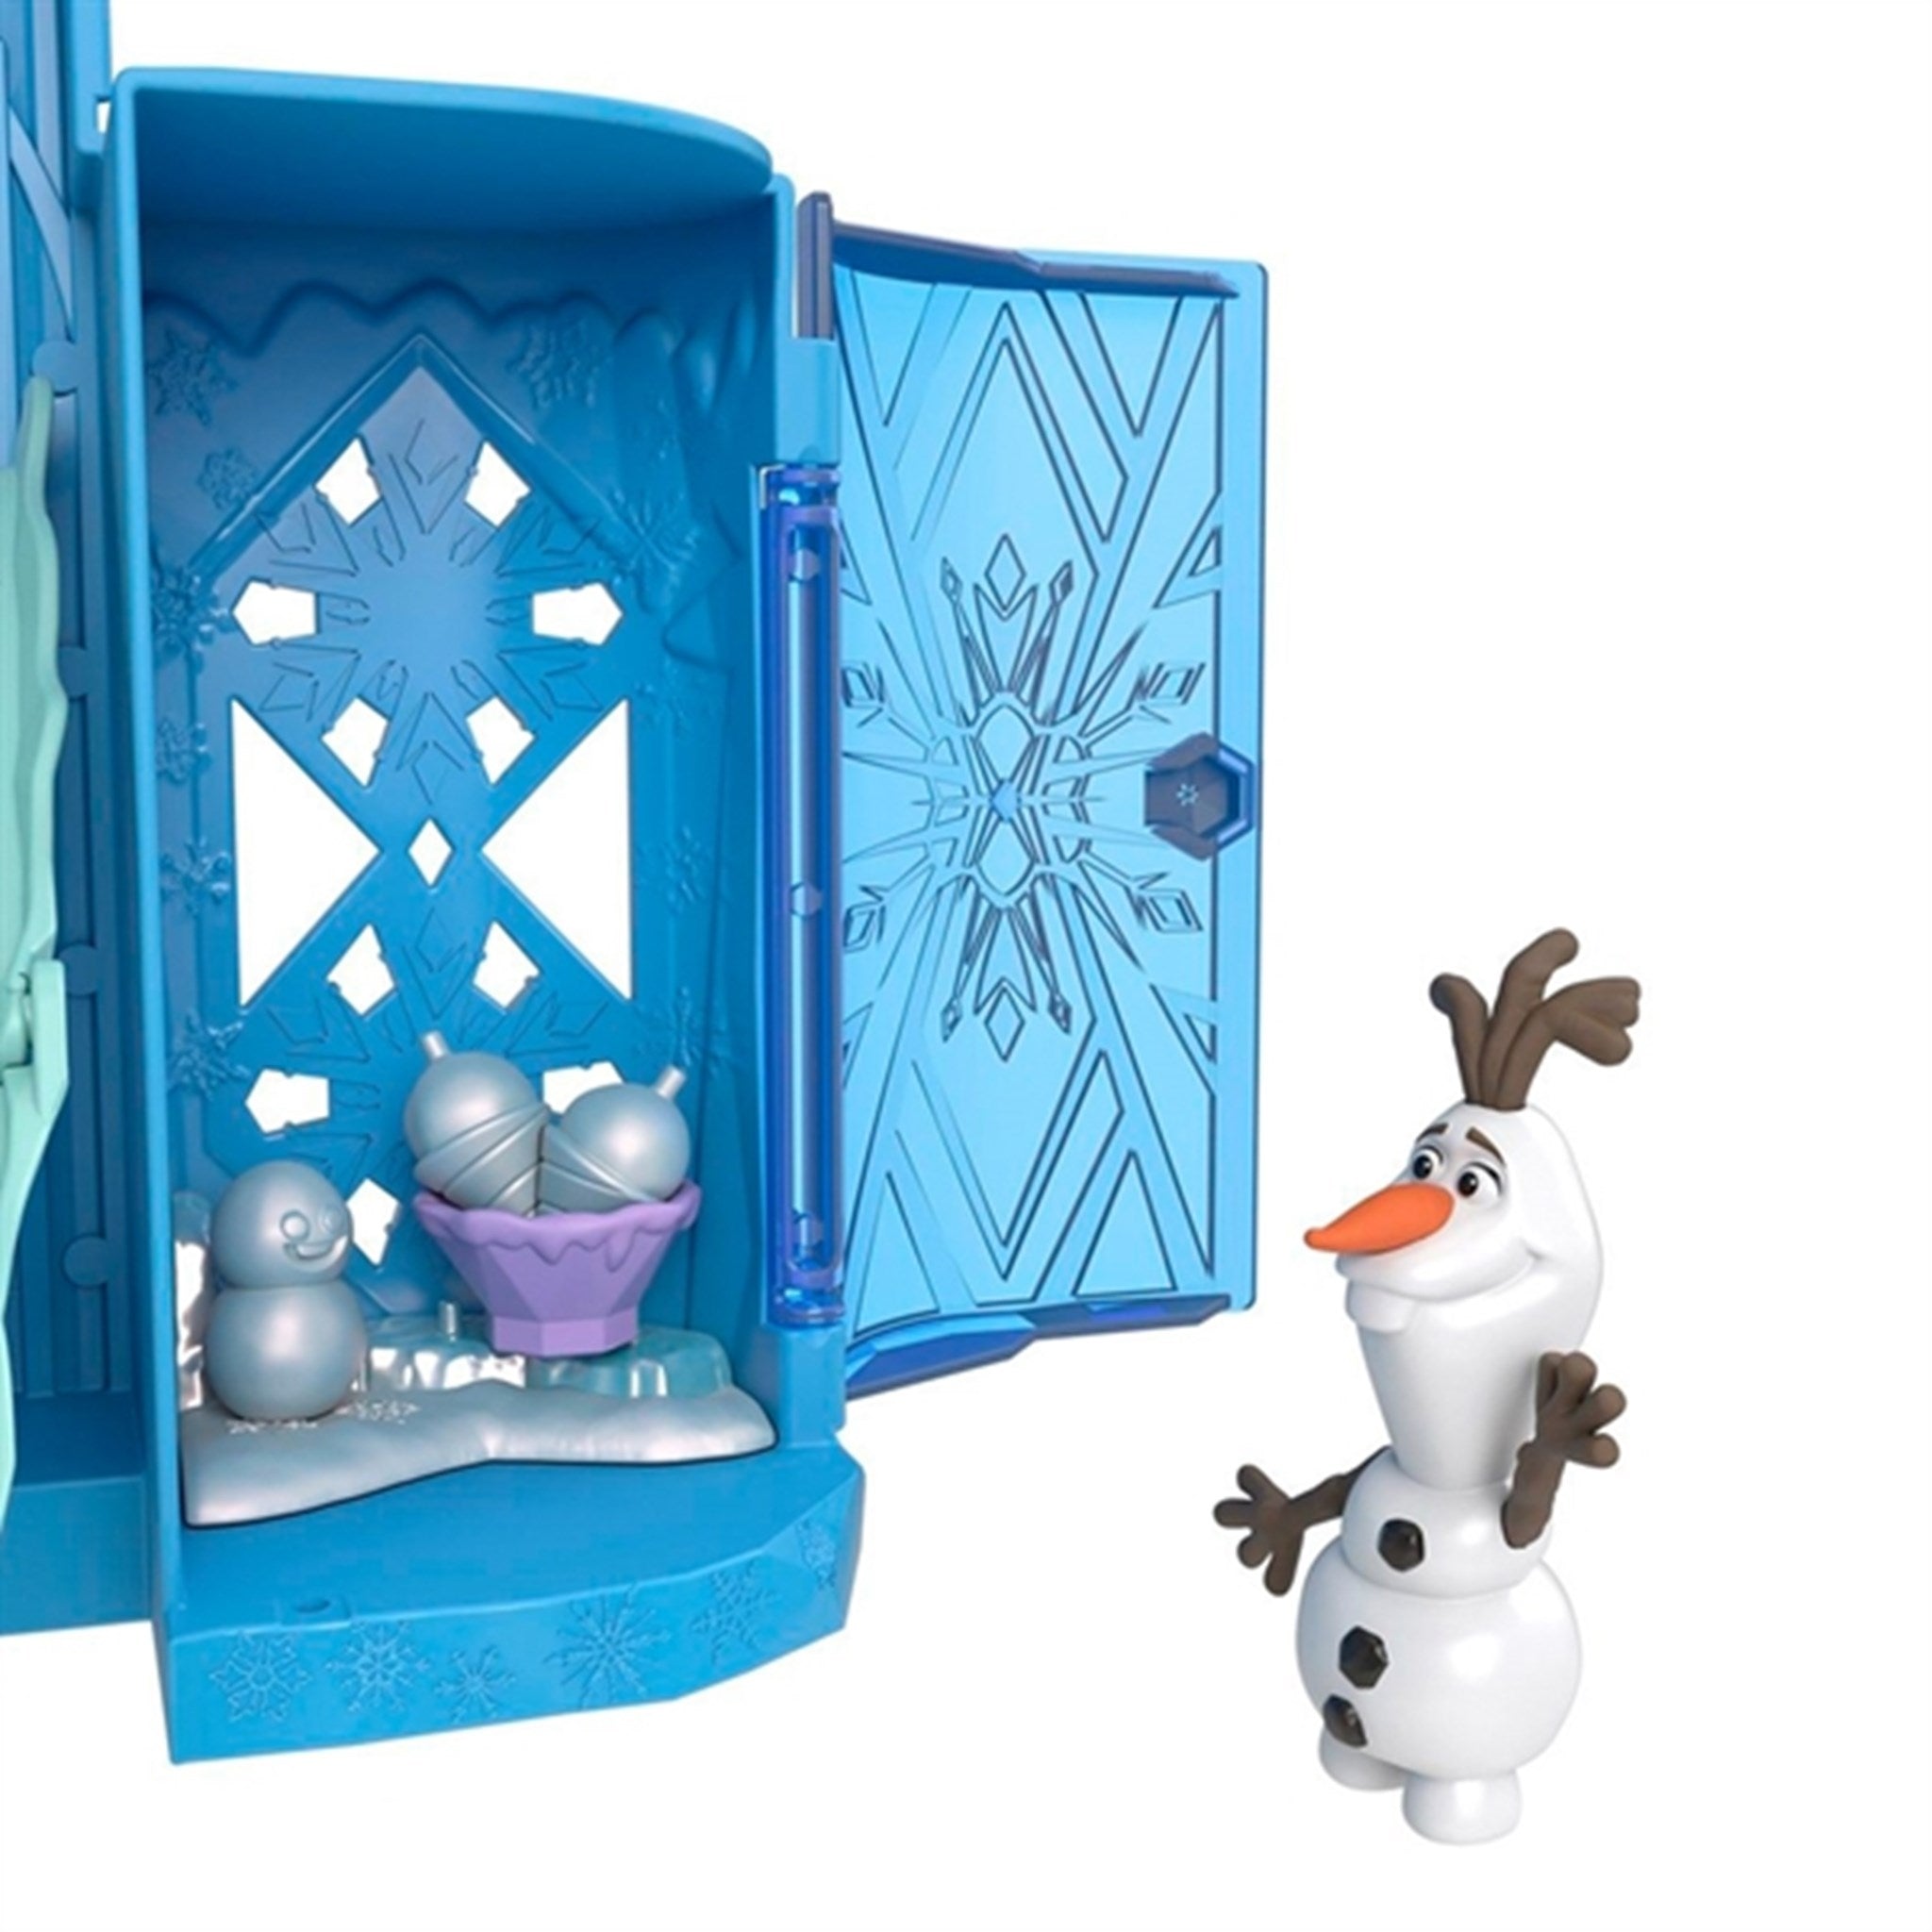 Disney Frozen Elsa's Ice Castle Playset 10